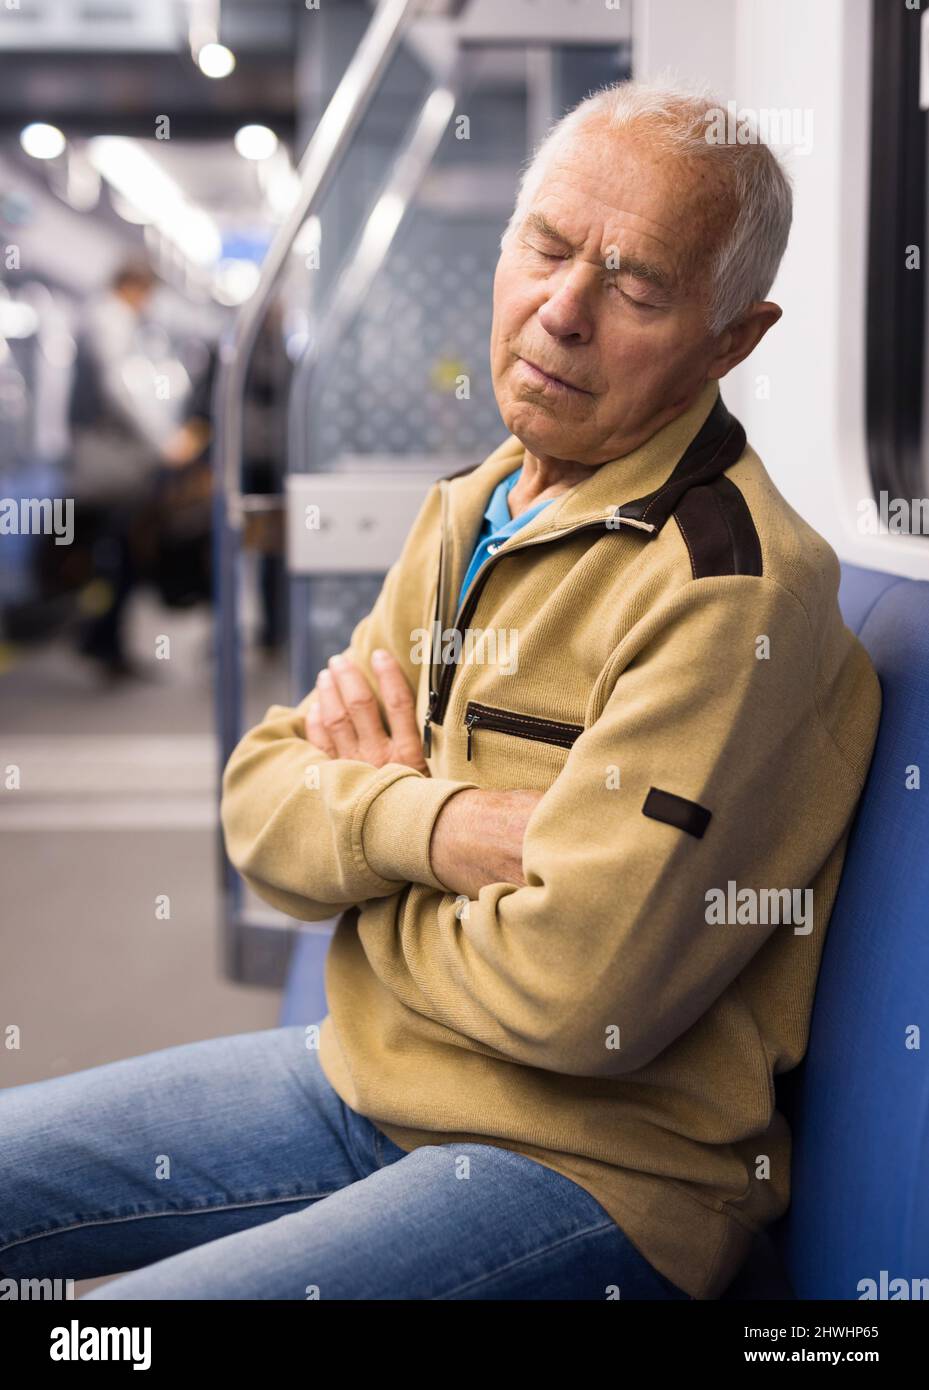 Old man sleeping in subway car Stock Photo